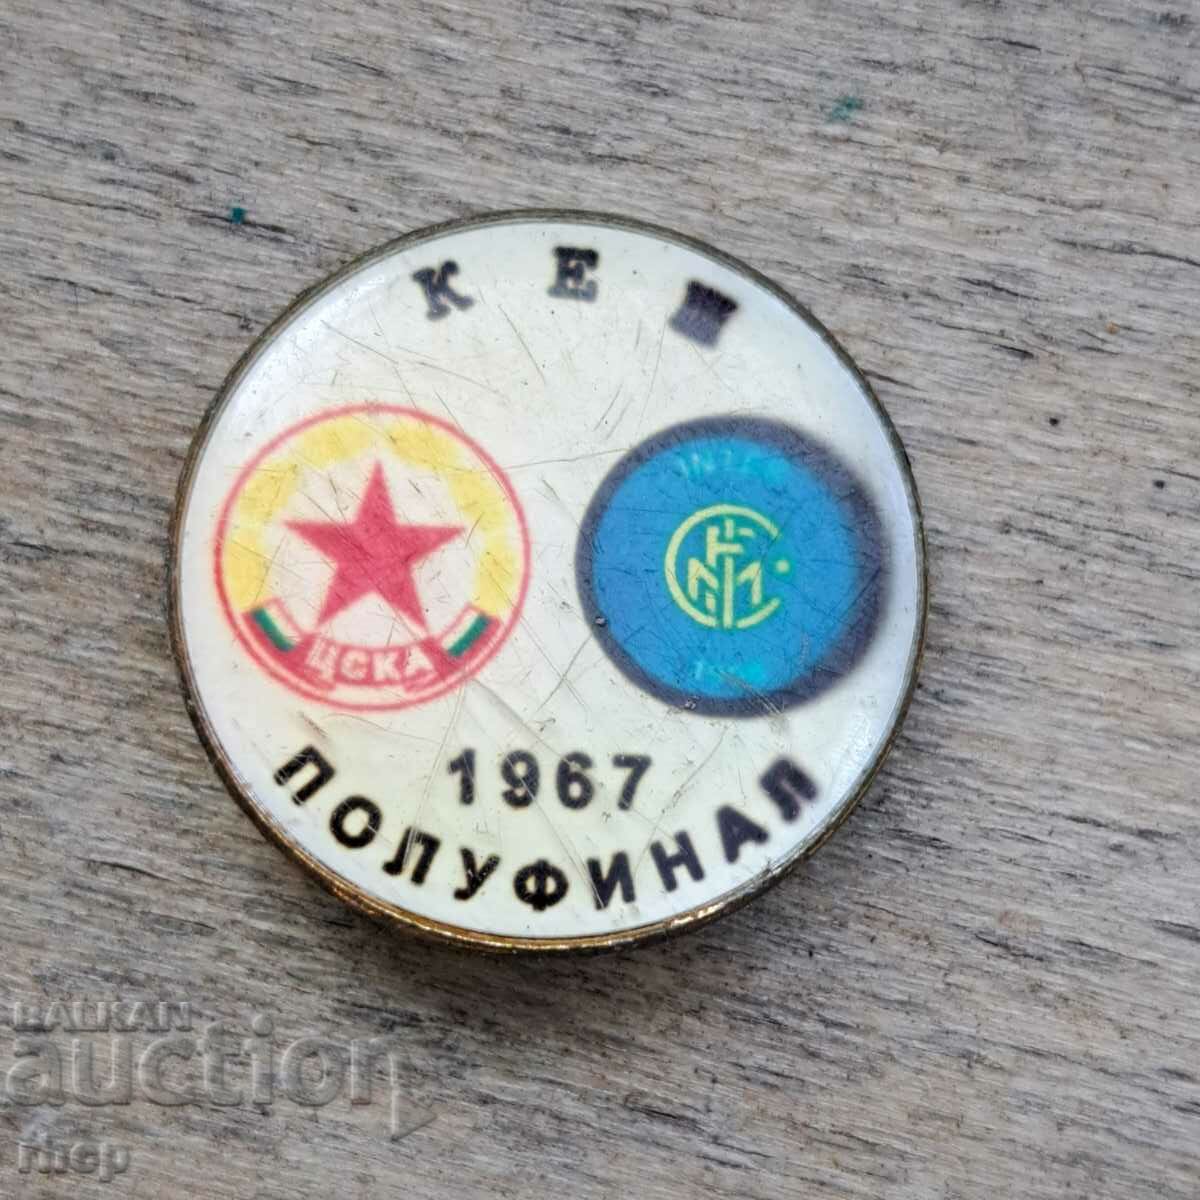 CSKA - Inter 1967 CASH old badge football